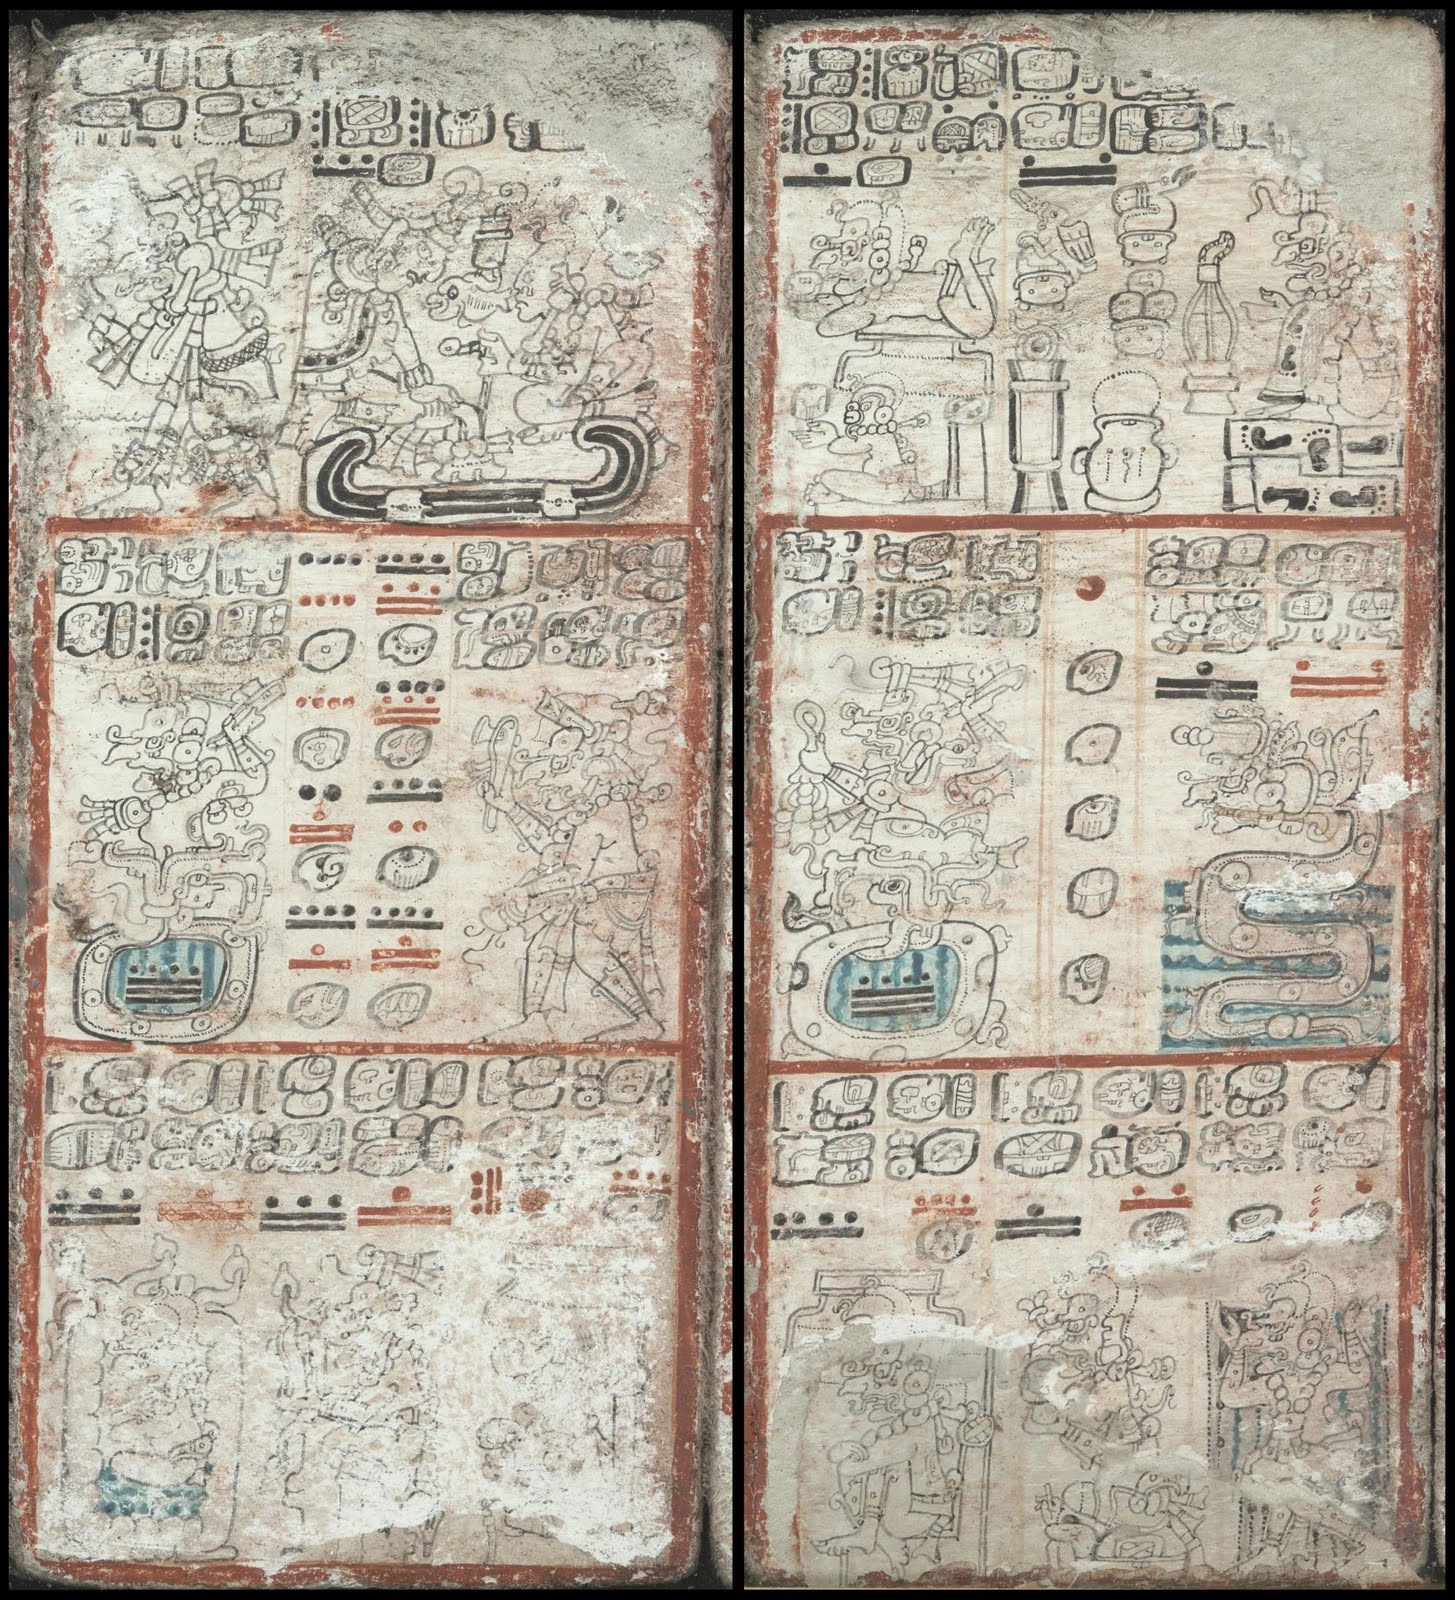 Mayan codex - Food offerings to the Rain God